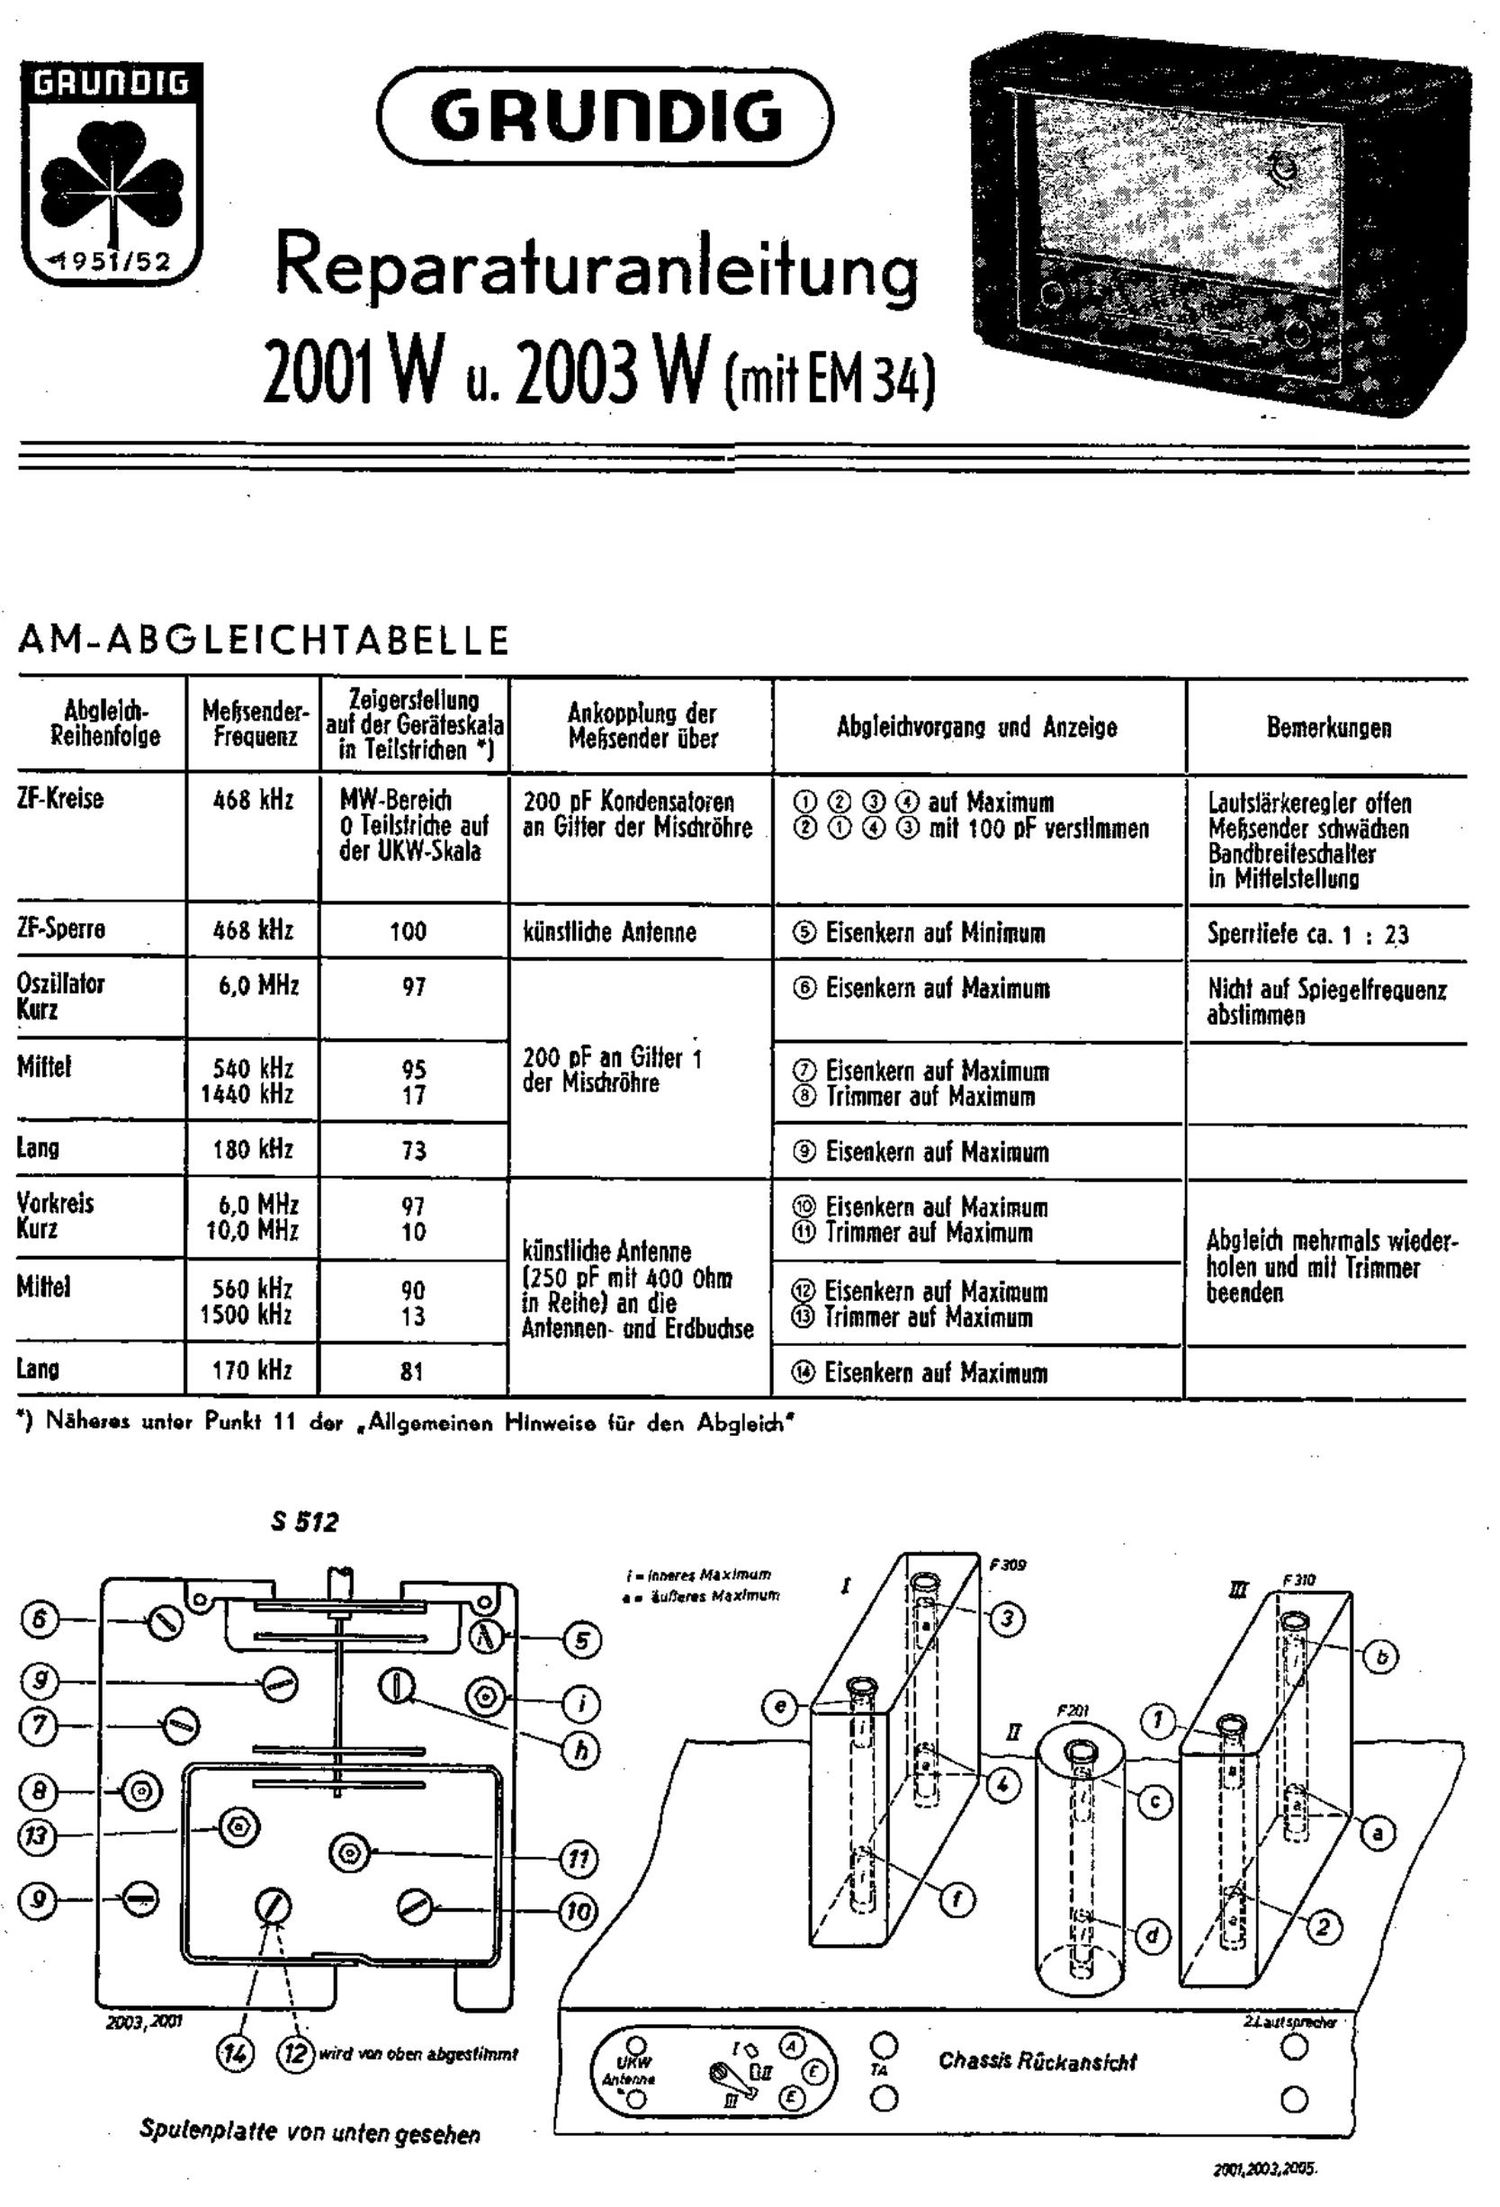 Grundig 2001 W Service Manual